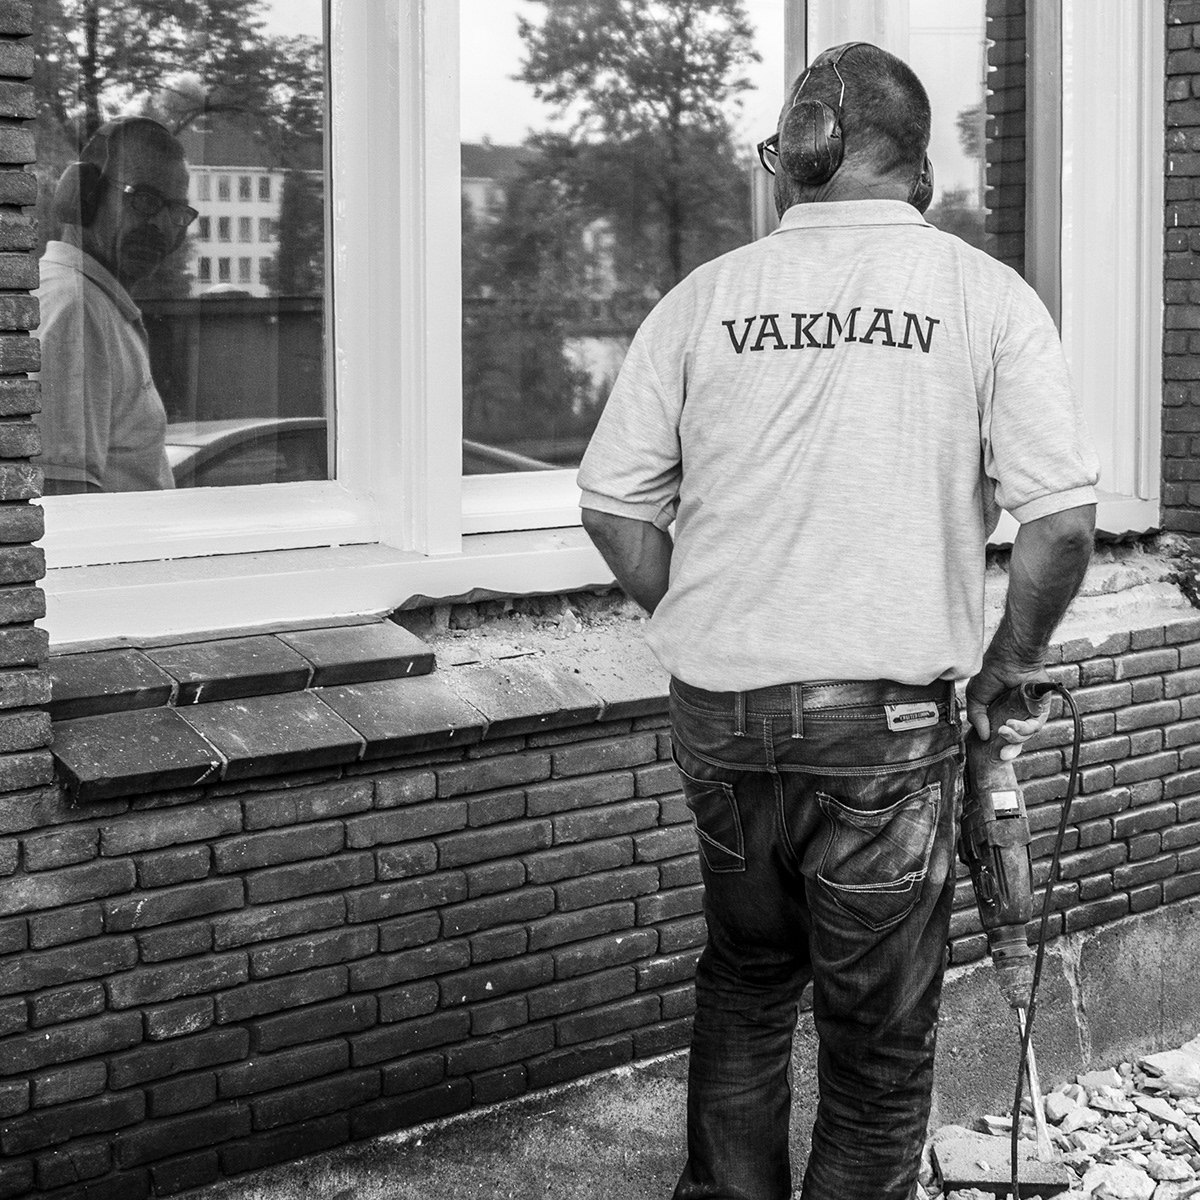 street photography amsterdam city people Urban social black & white City Atmosphere